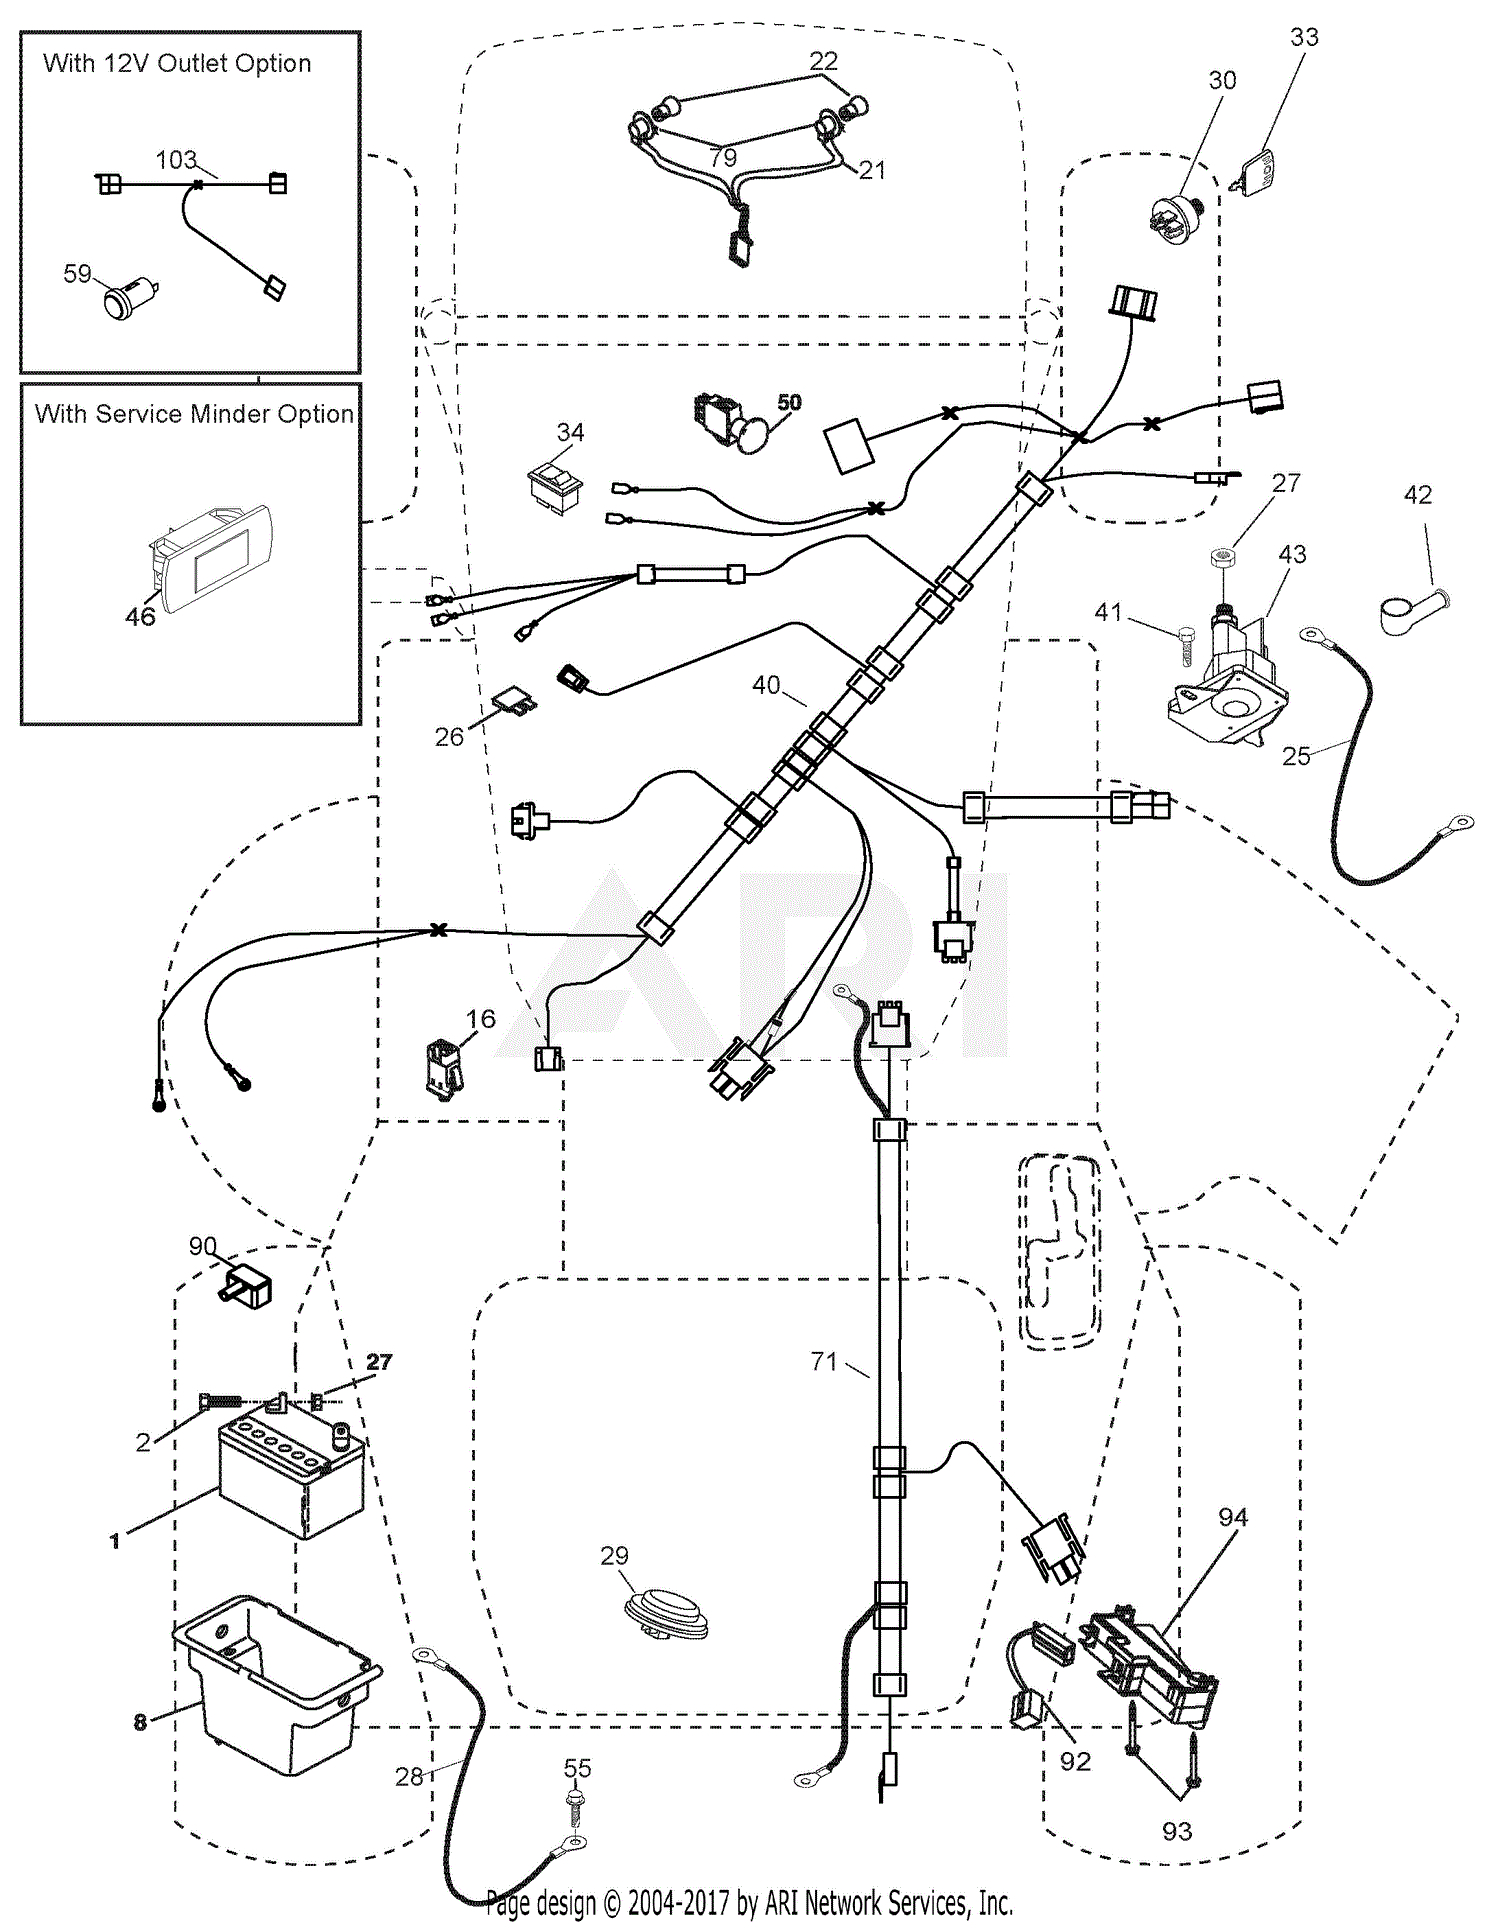 2003 Mitsubishi Lancer Fuse Box Location - Wiring Diagram Schemas